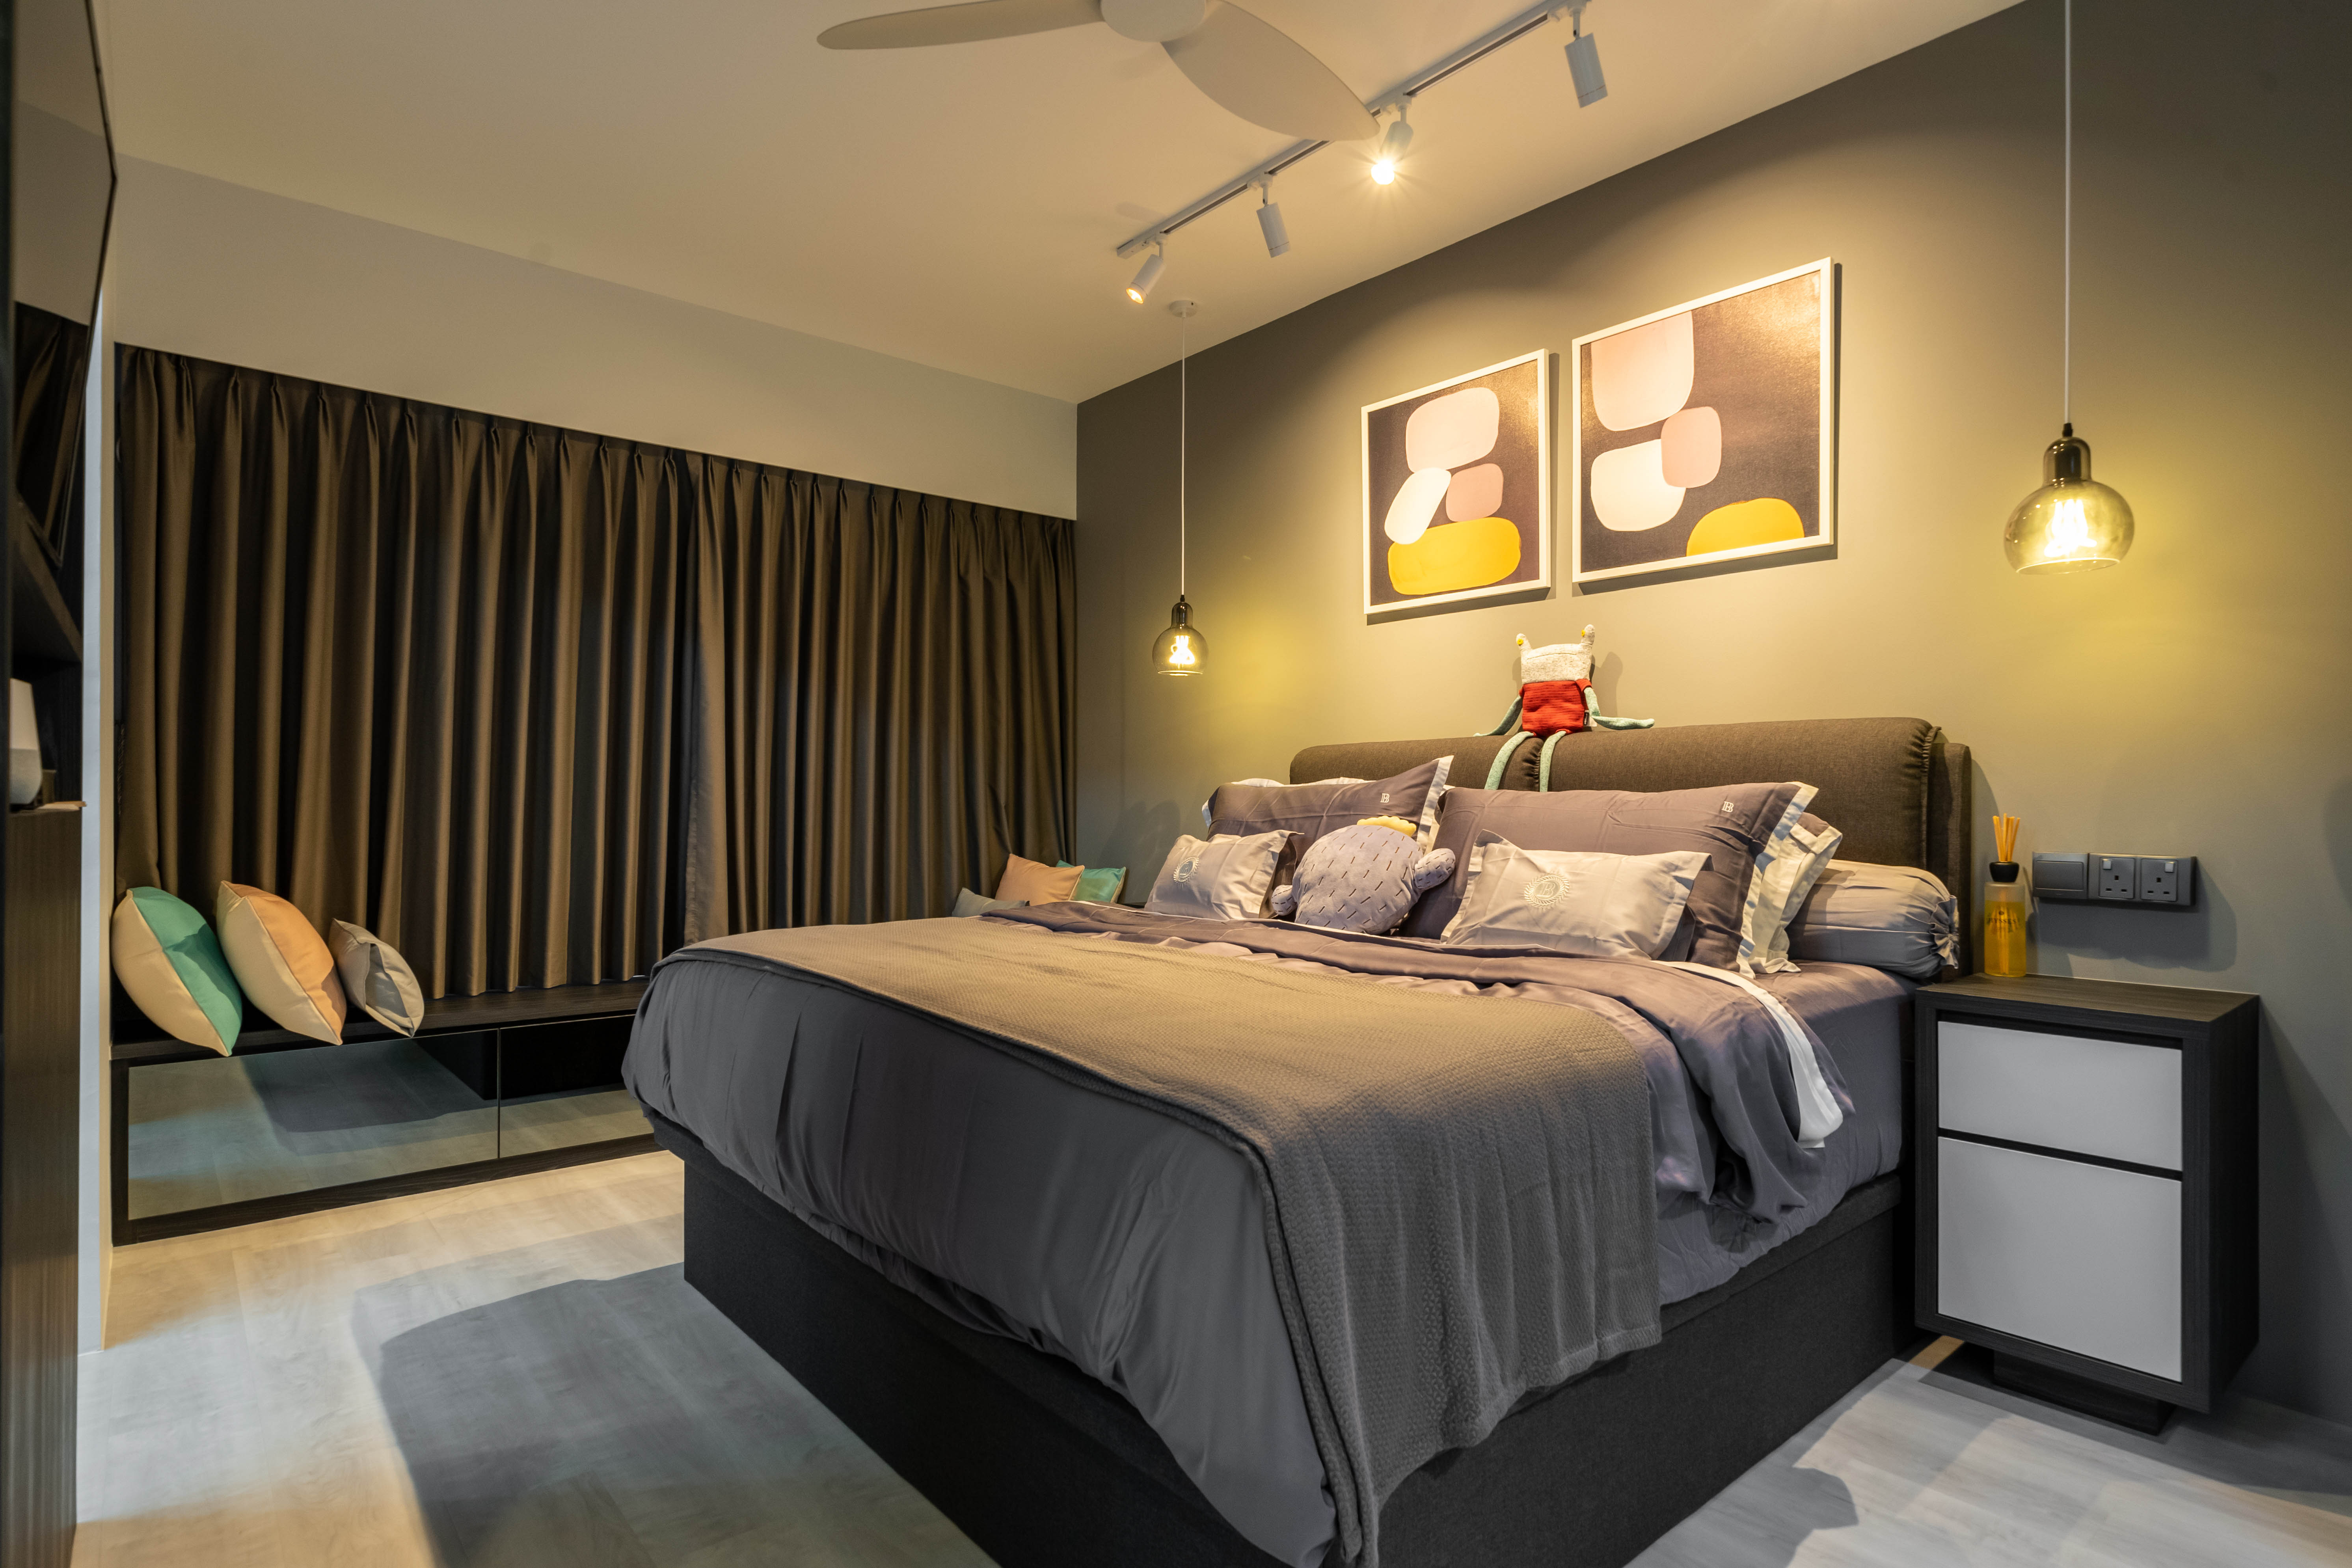 Minimalist Design - Bedroom - HDB 4 Room - Design by Design 4 Space Pte Ltd